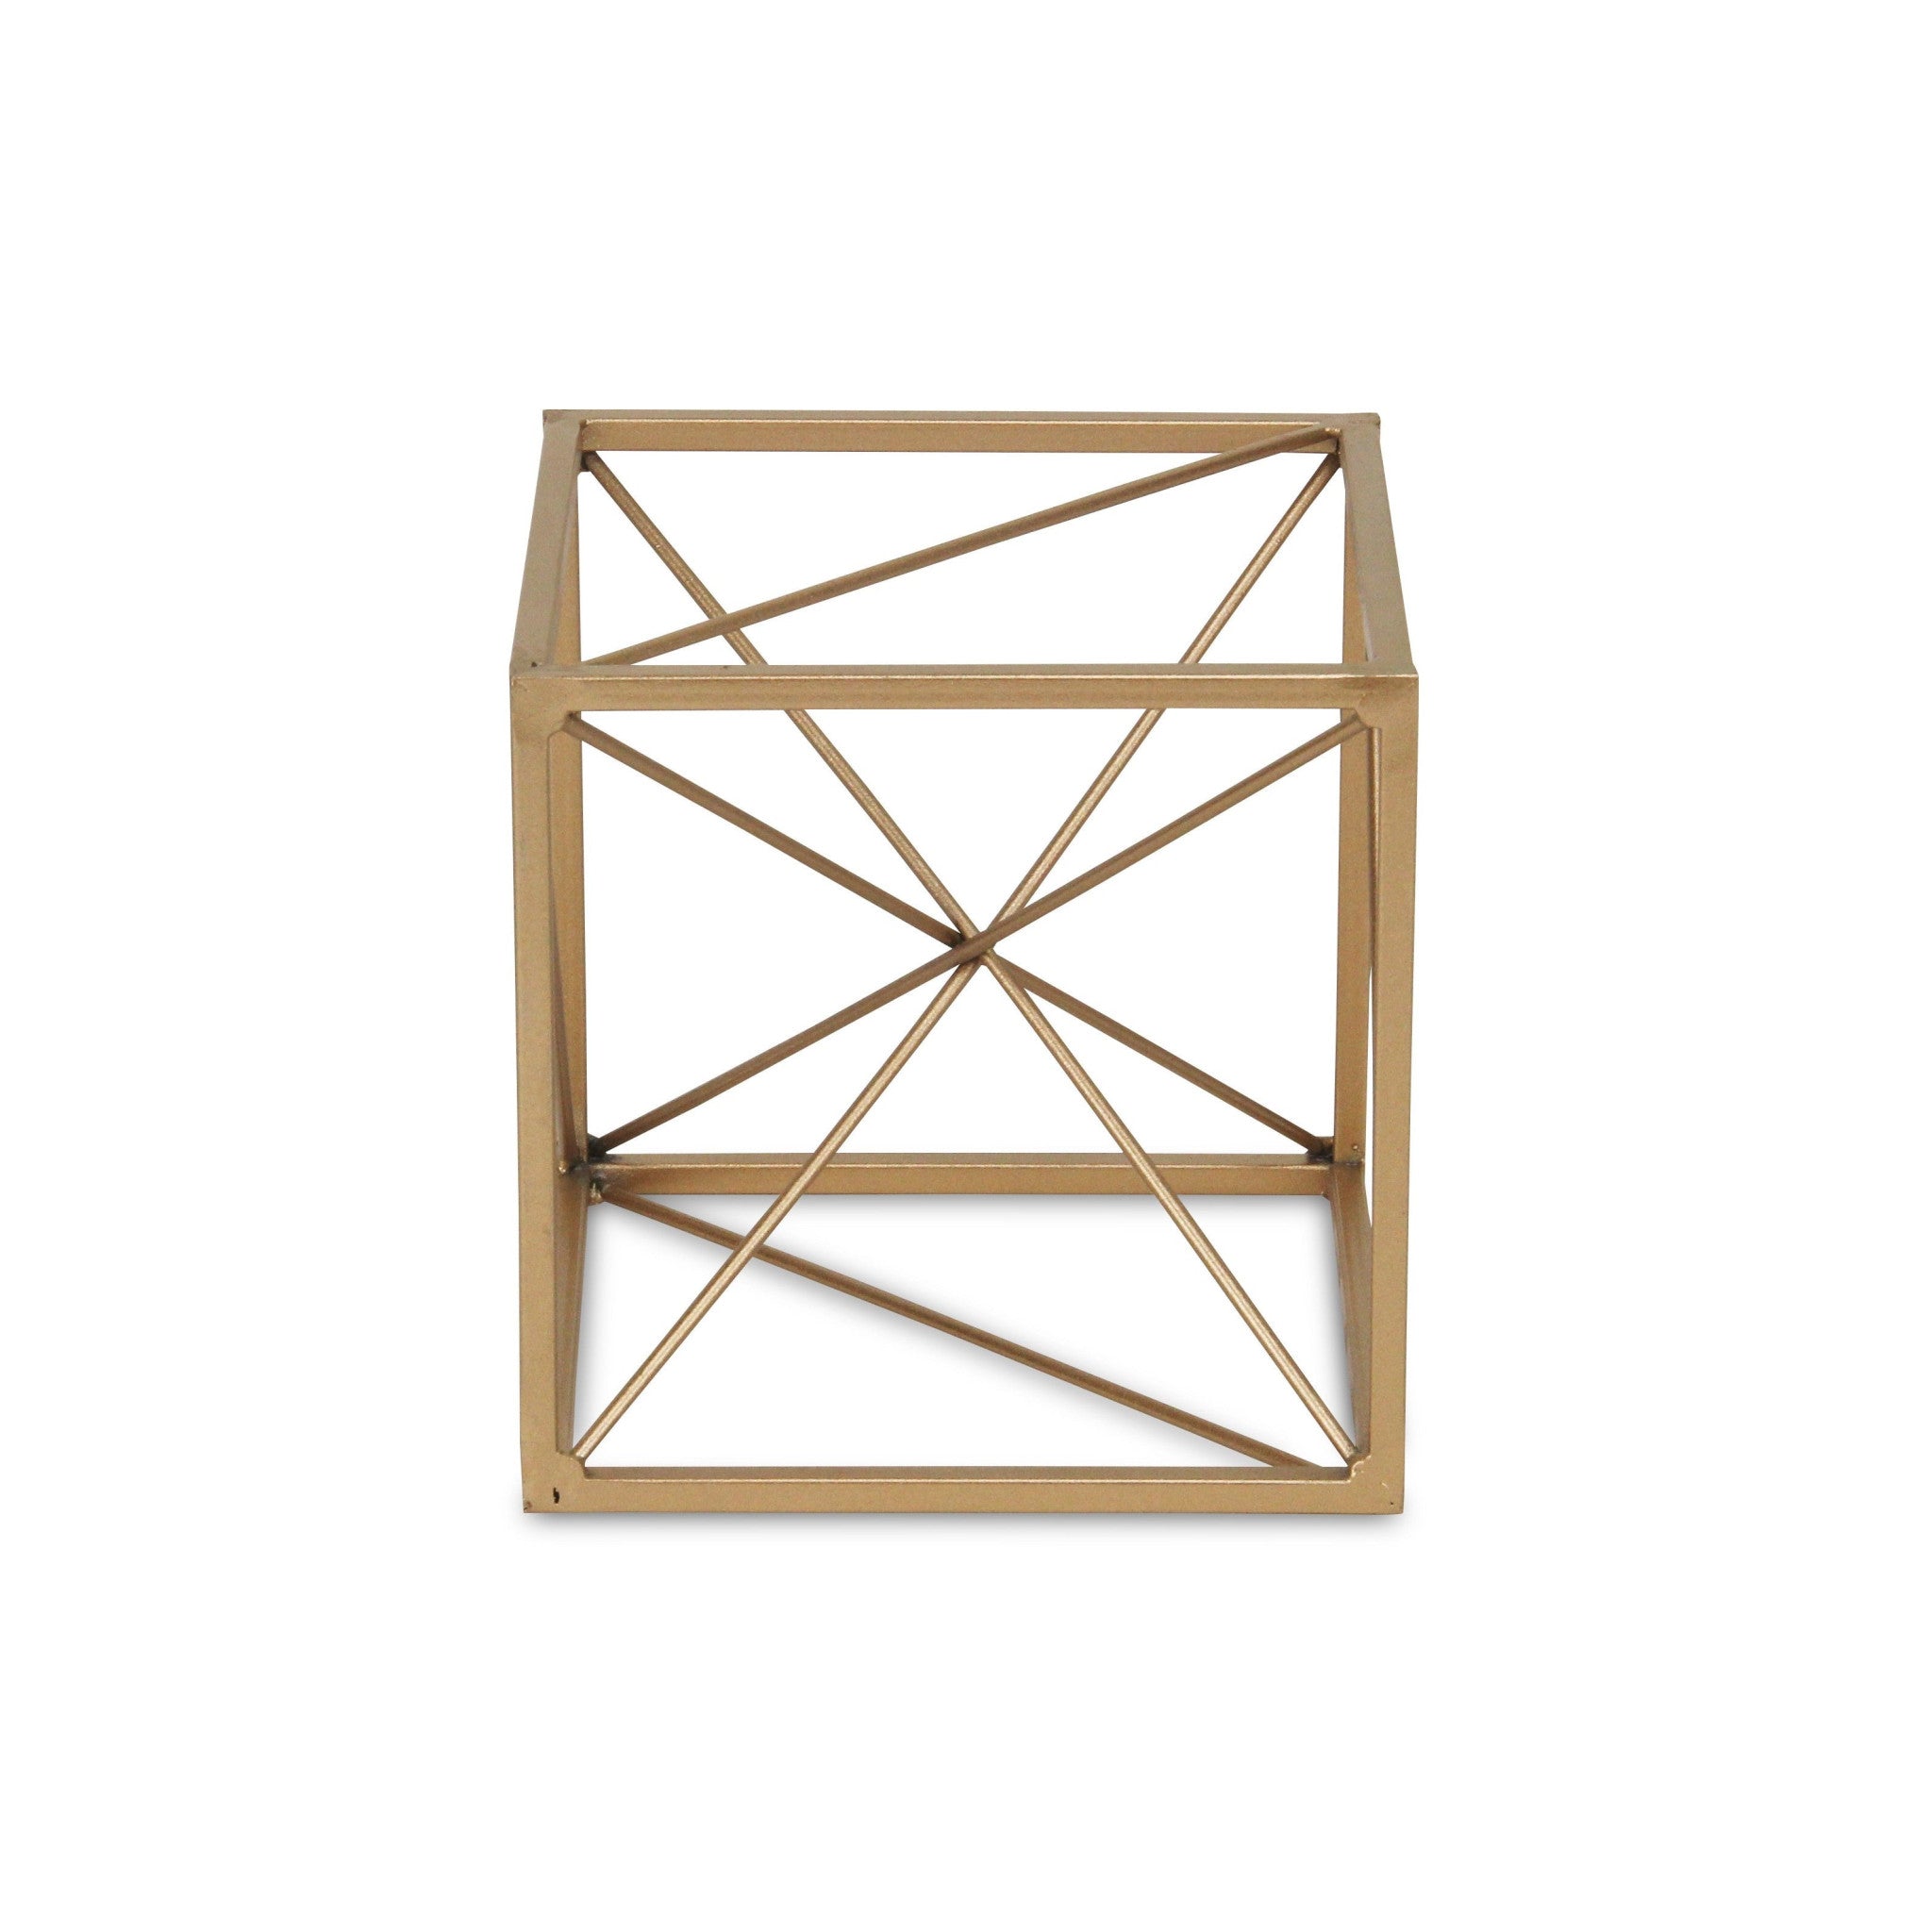 6" Gold Metal Cube Sculpture